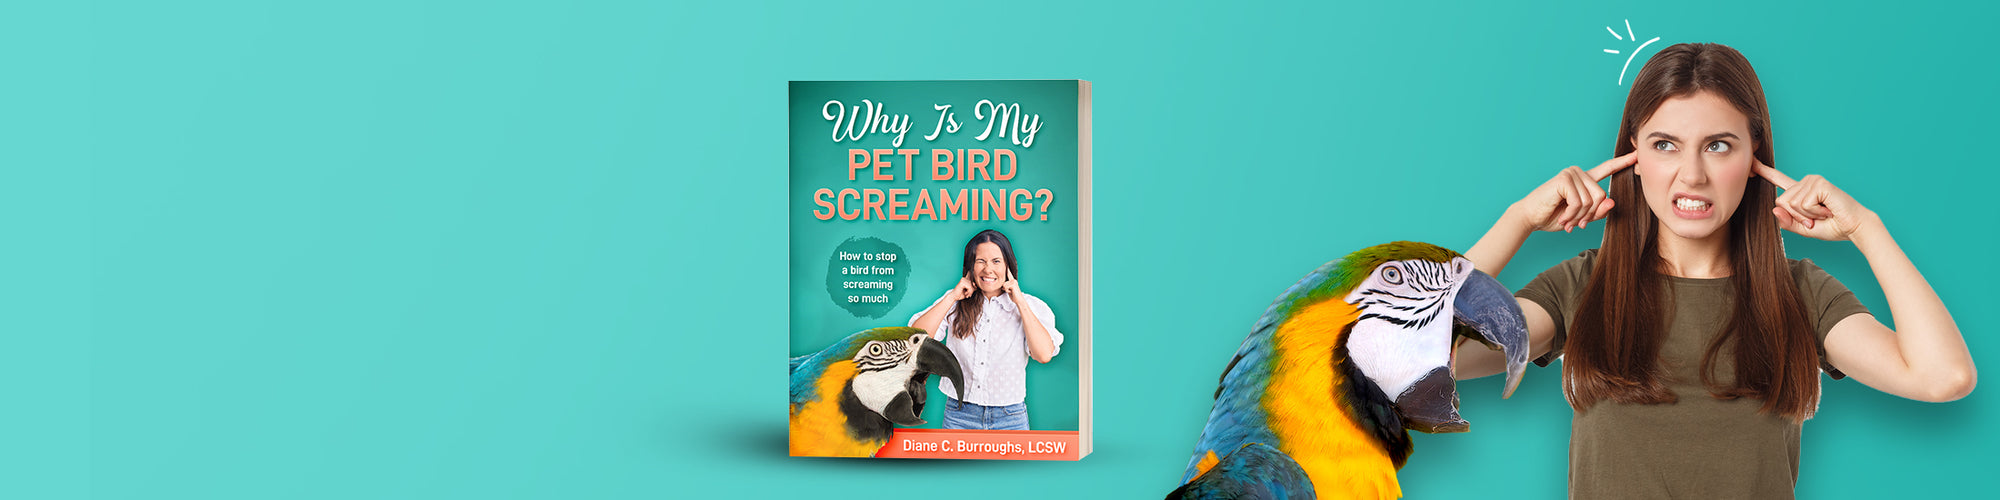 why does my bird scream?